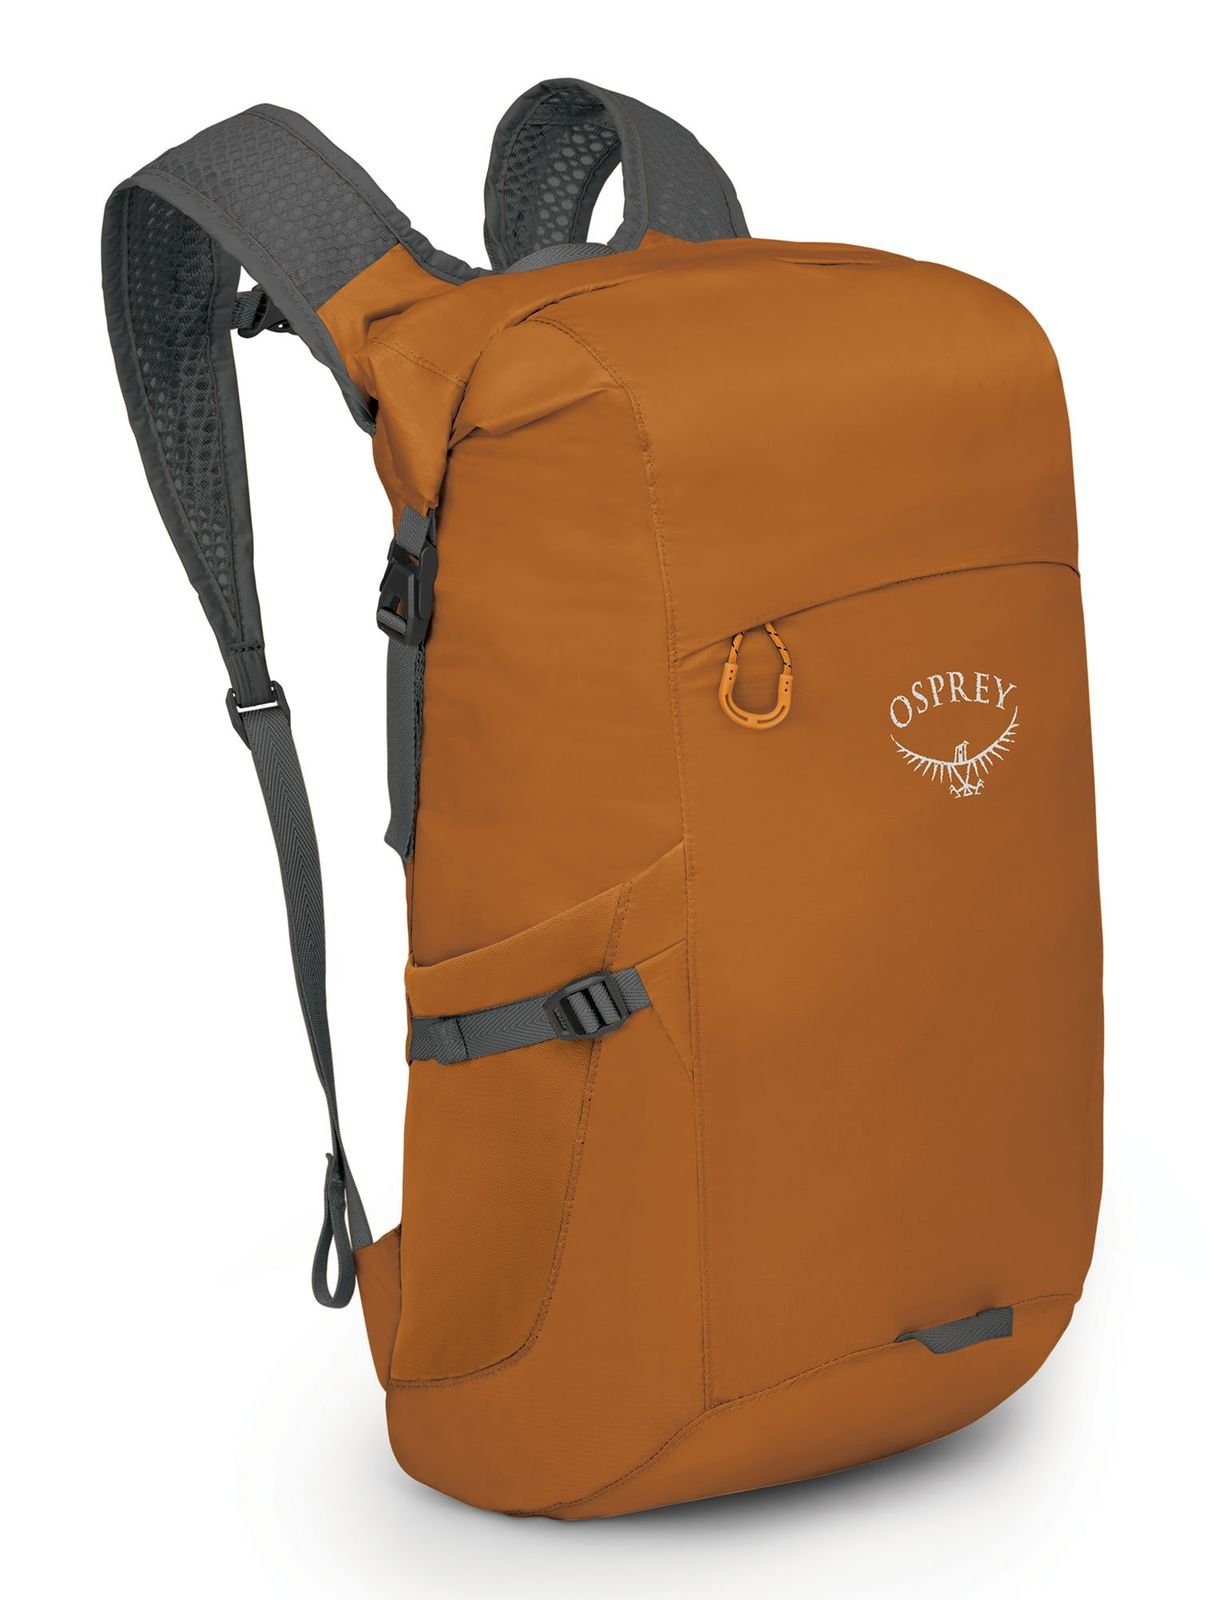 Osprey Rucksack Toffee Ultralight Orange